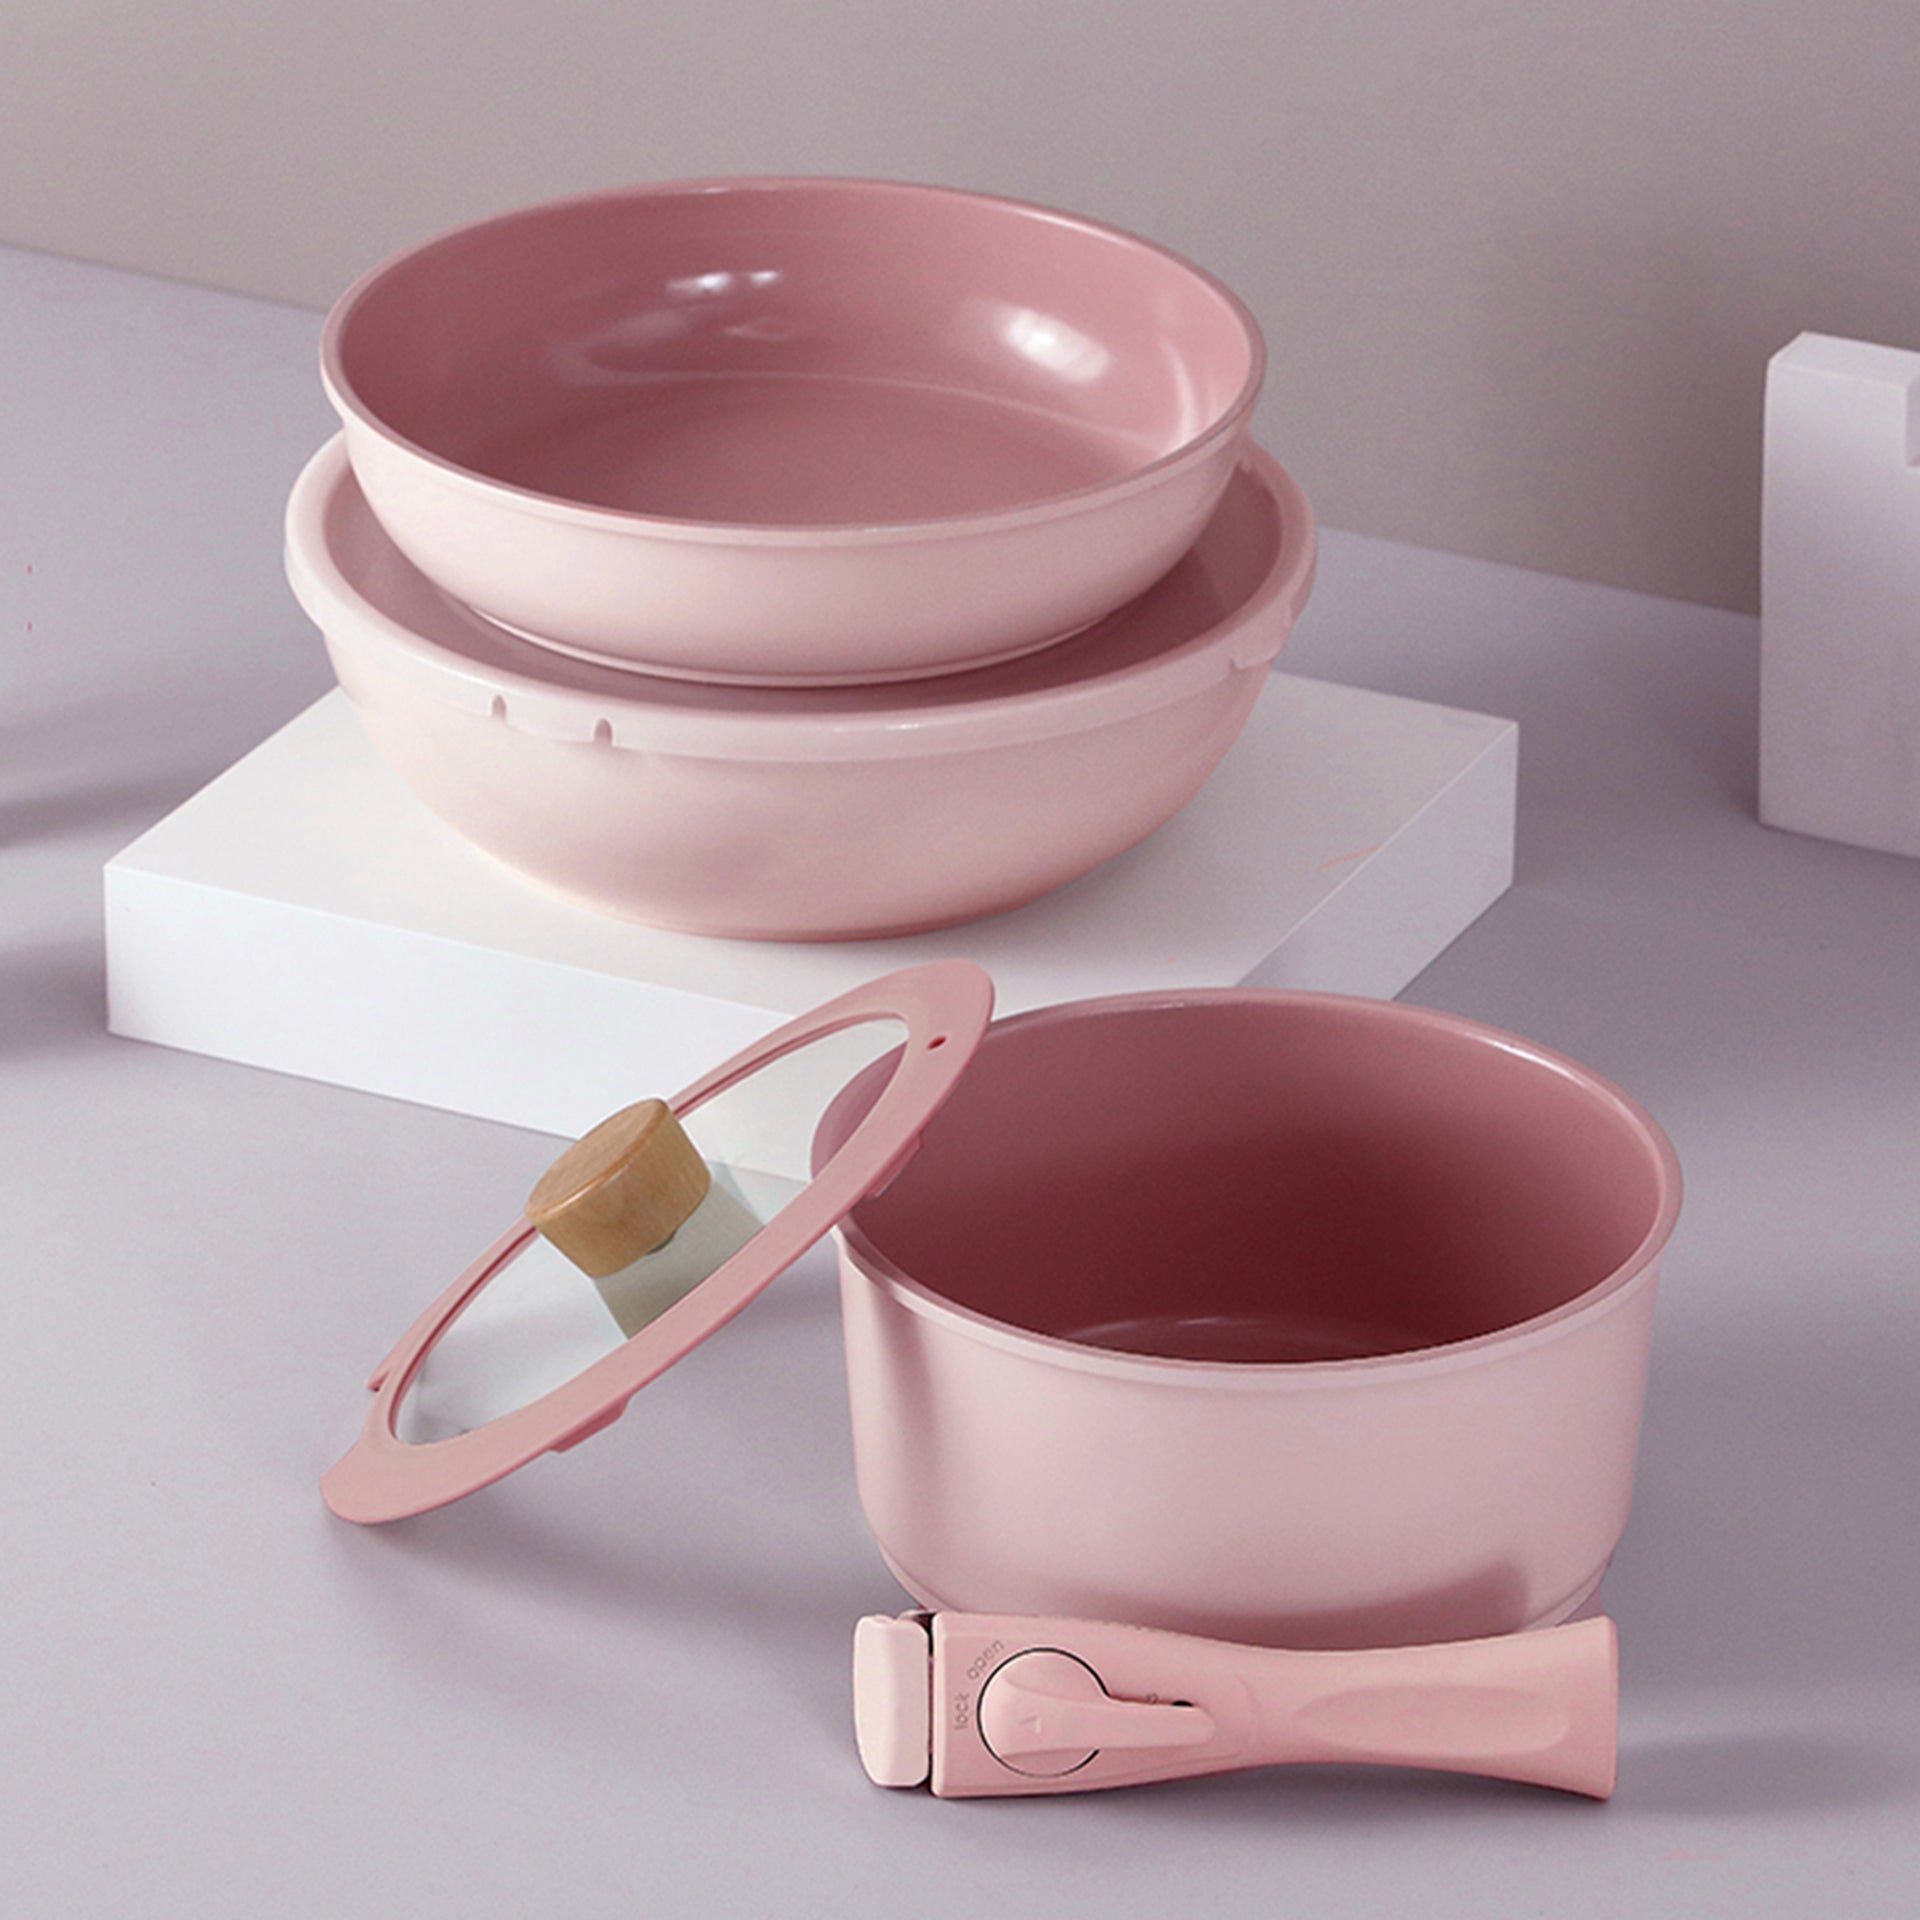 Clean Ceramic Nonstick Cast Aluminum Cookware Set w/Heart Shaped Lid Knobs  Pink